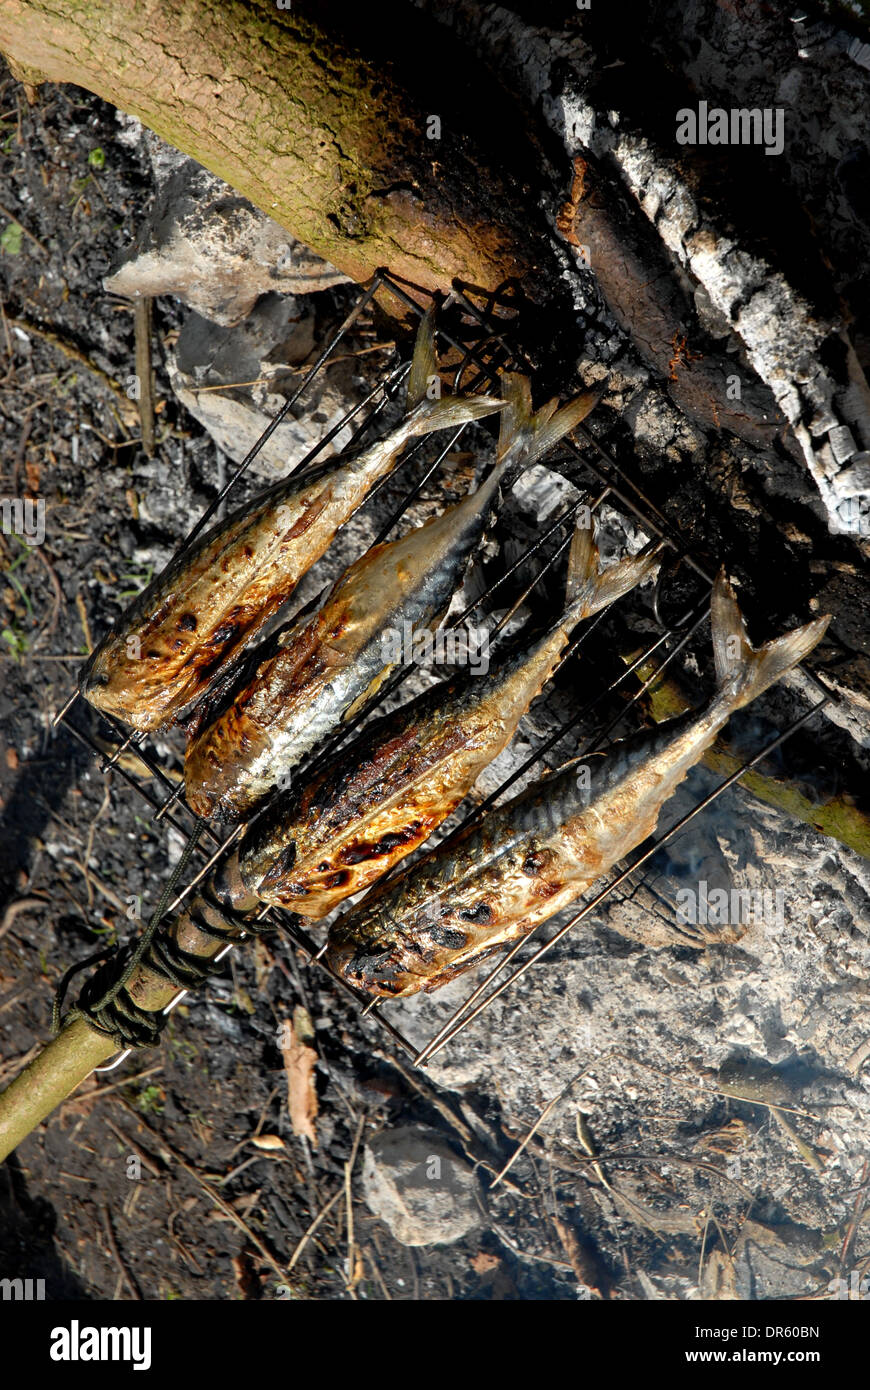 Cooking Mackerel On an Open Fire Stock Photo